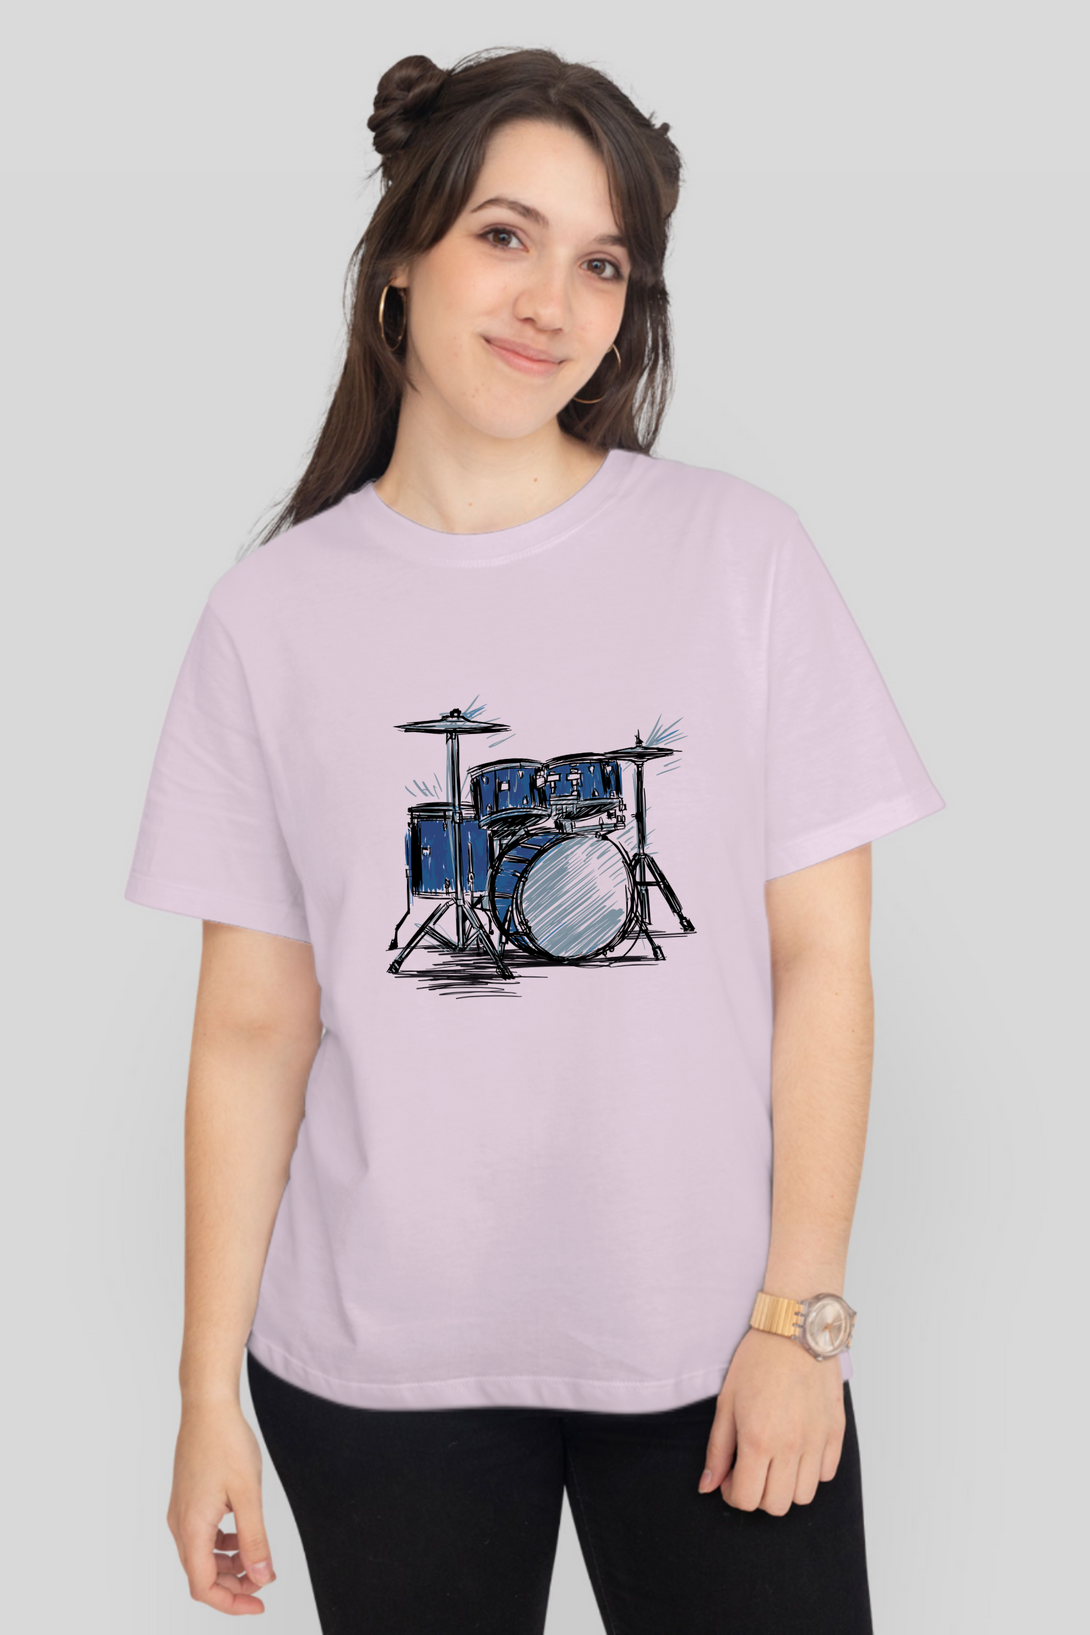 Rhythmic Beats Printed T-Shirt For Women - WowWaves - 10